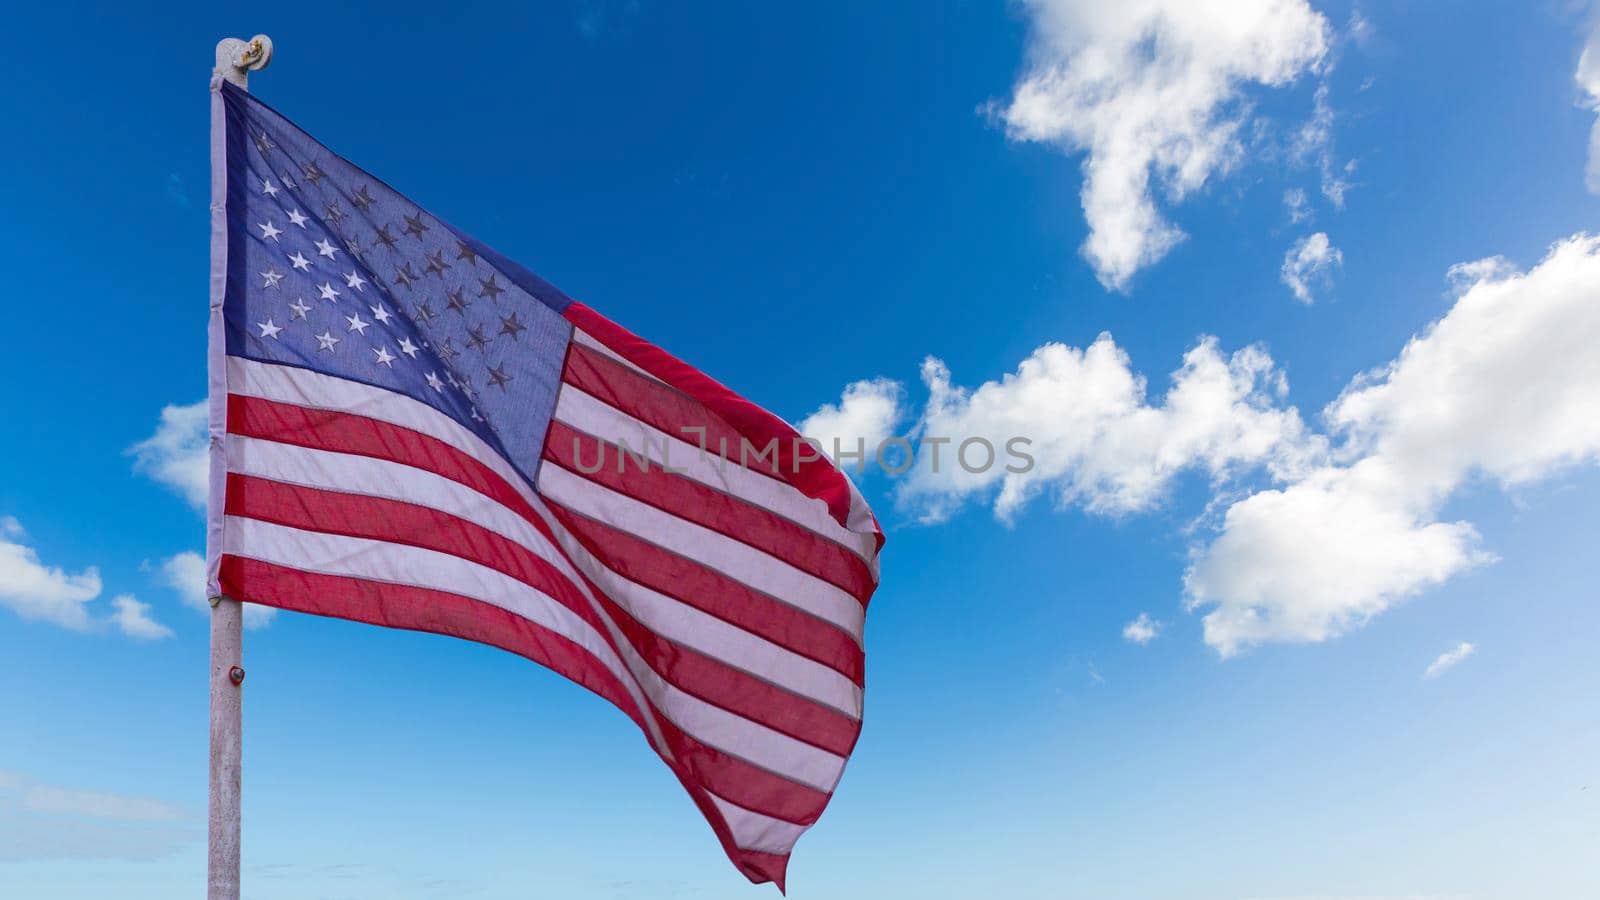 illustration of American Flag waving in sky backdrop by Andelov13